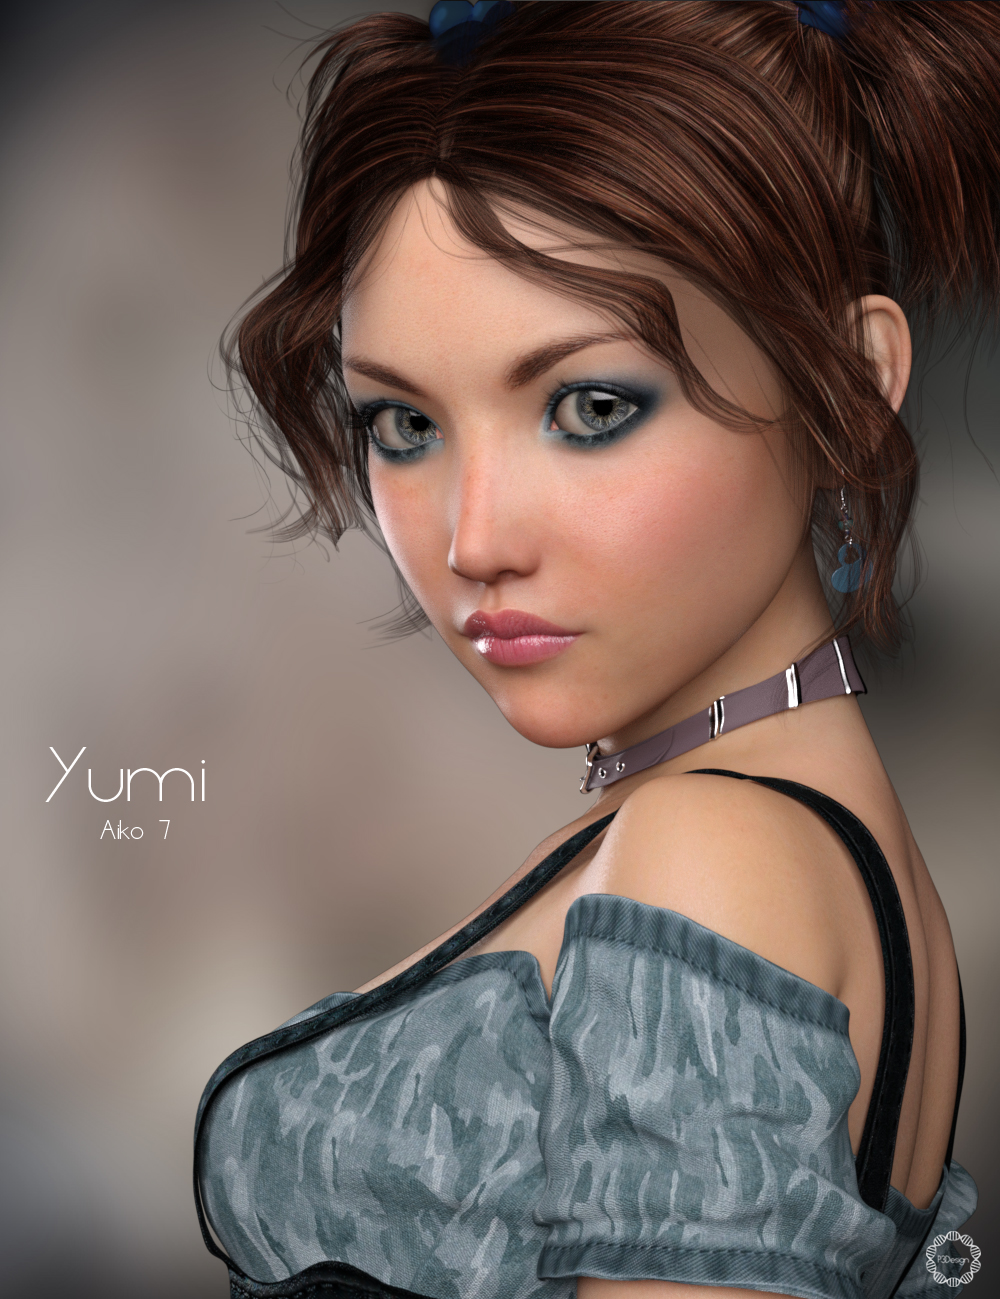 P3D Yumi by: P3Design, 3D Models by Daz 3D